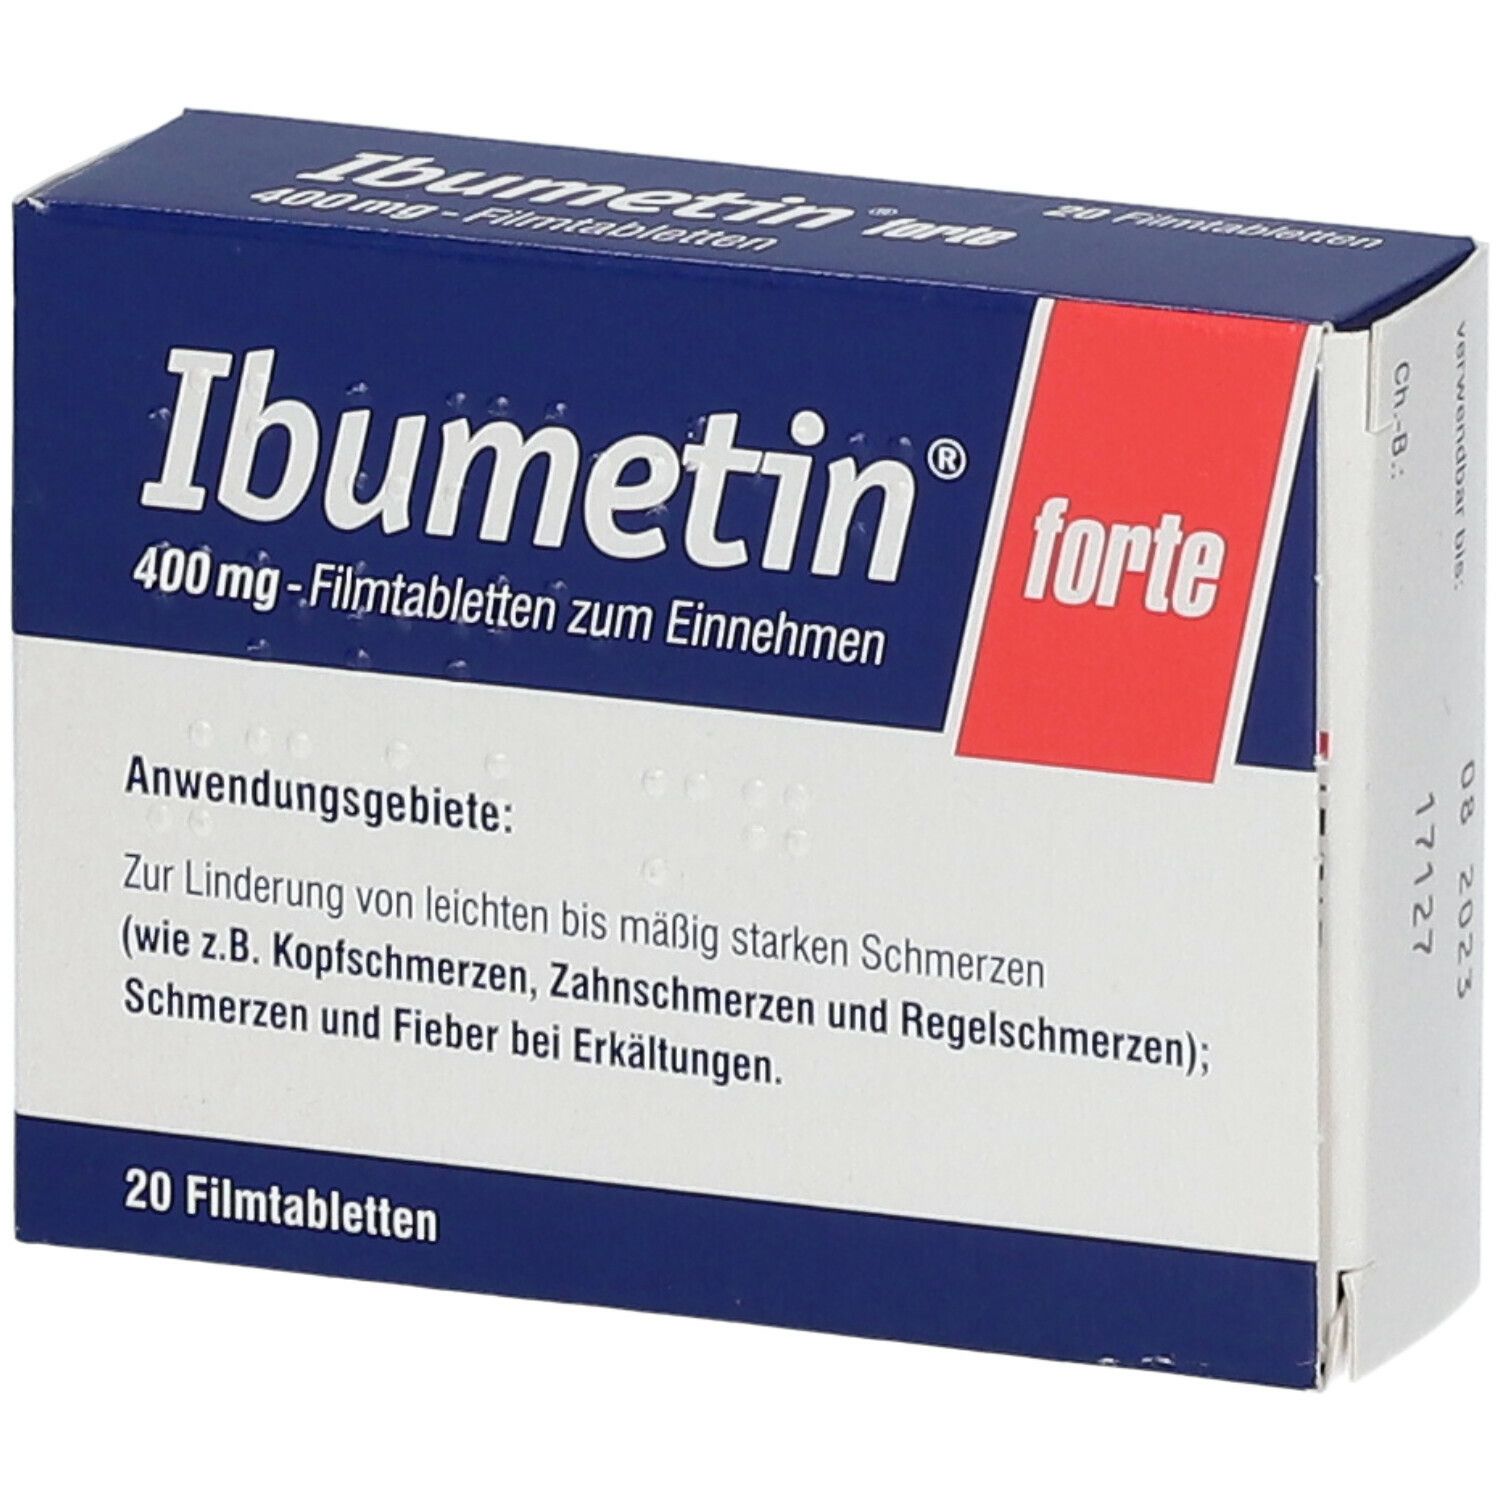 Ibumetin® forte 400 mg